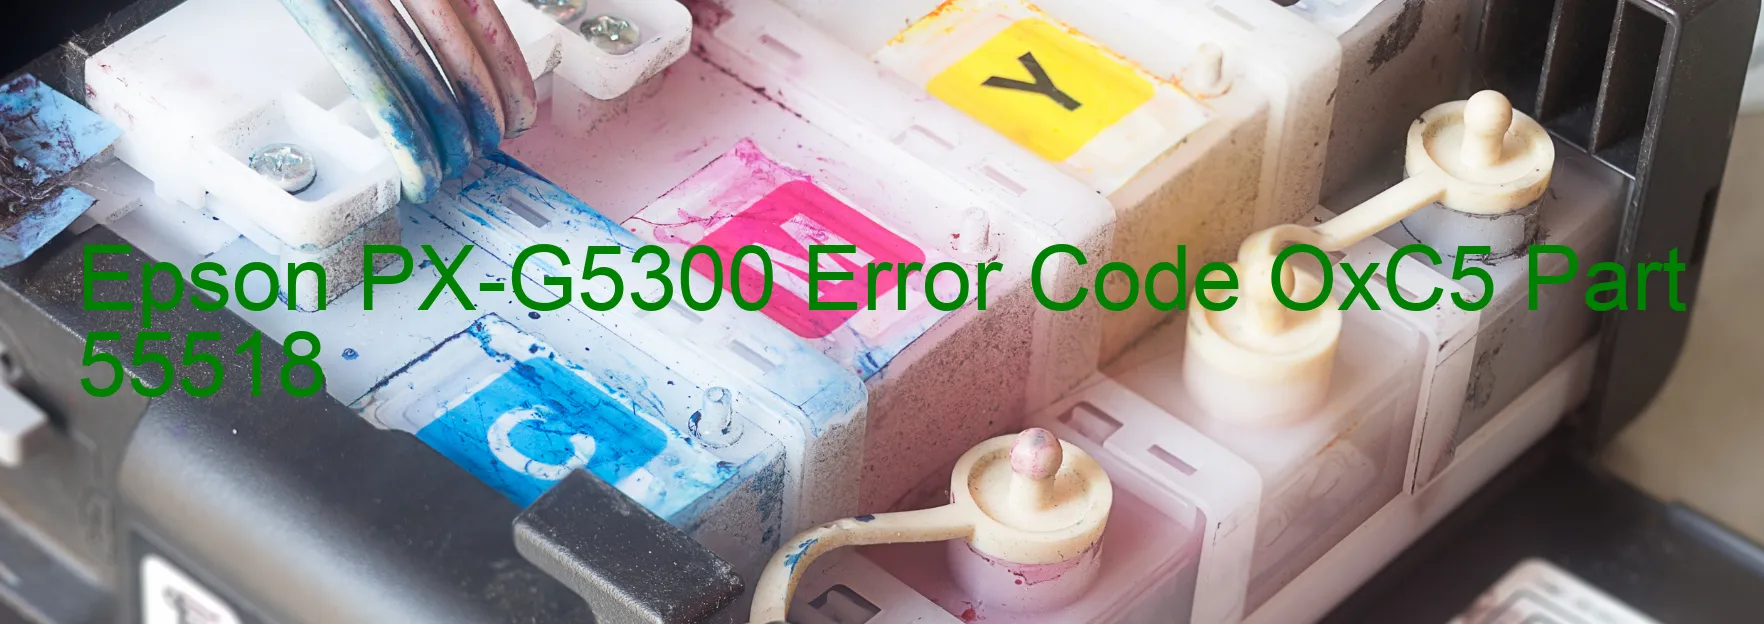 Epson PX-G5300 Error Code OxC5 Part 55518